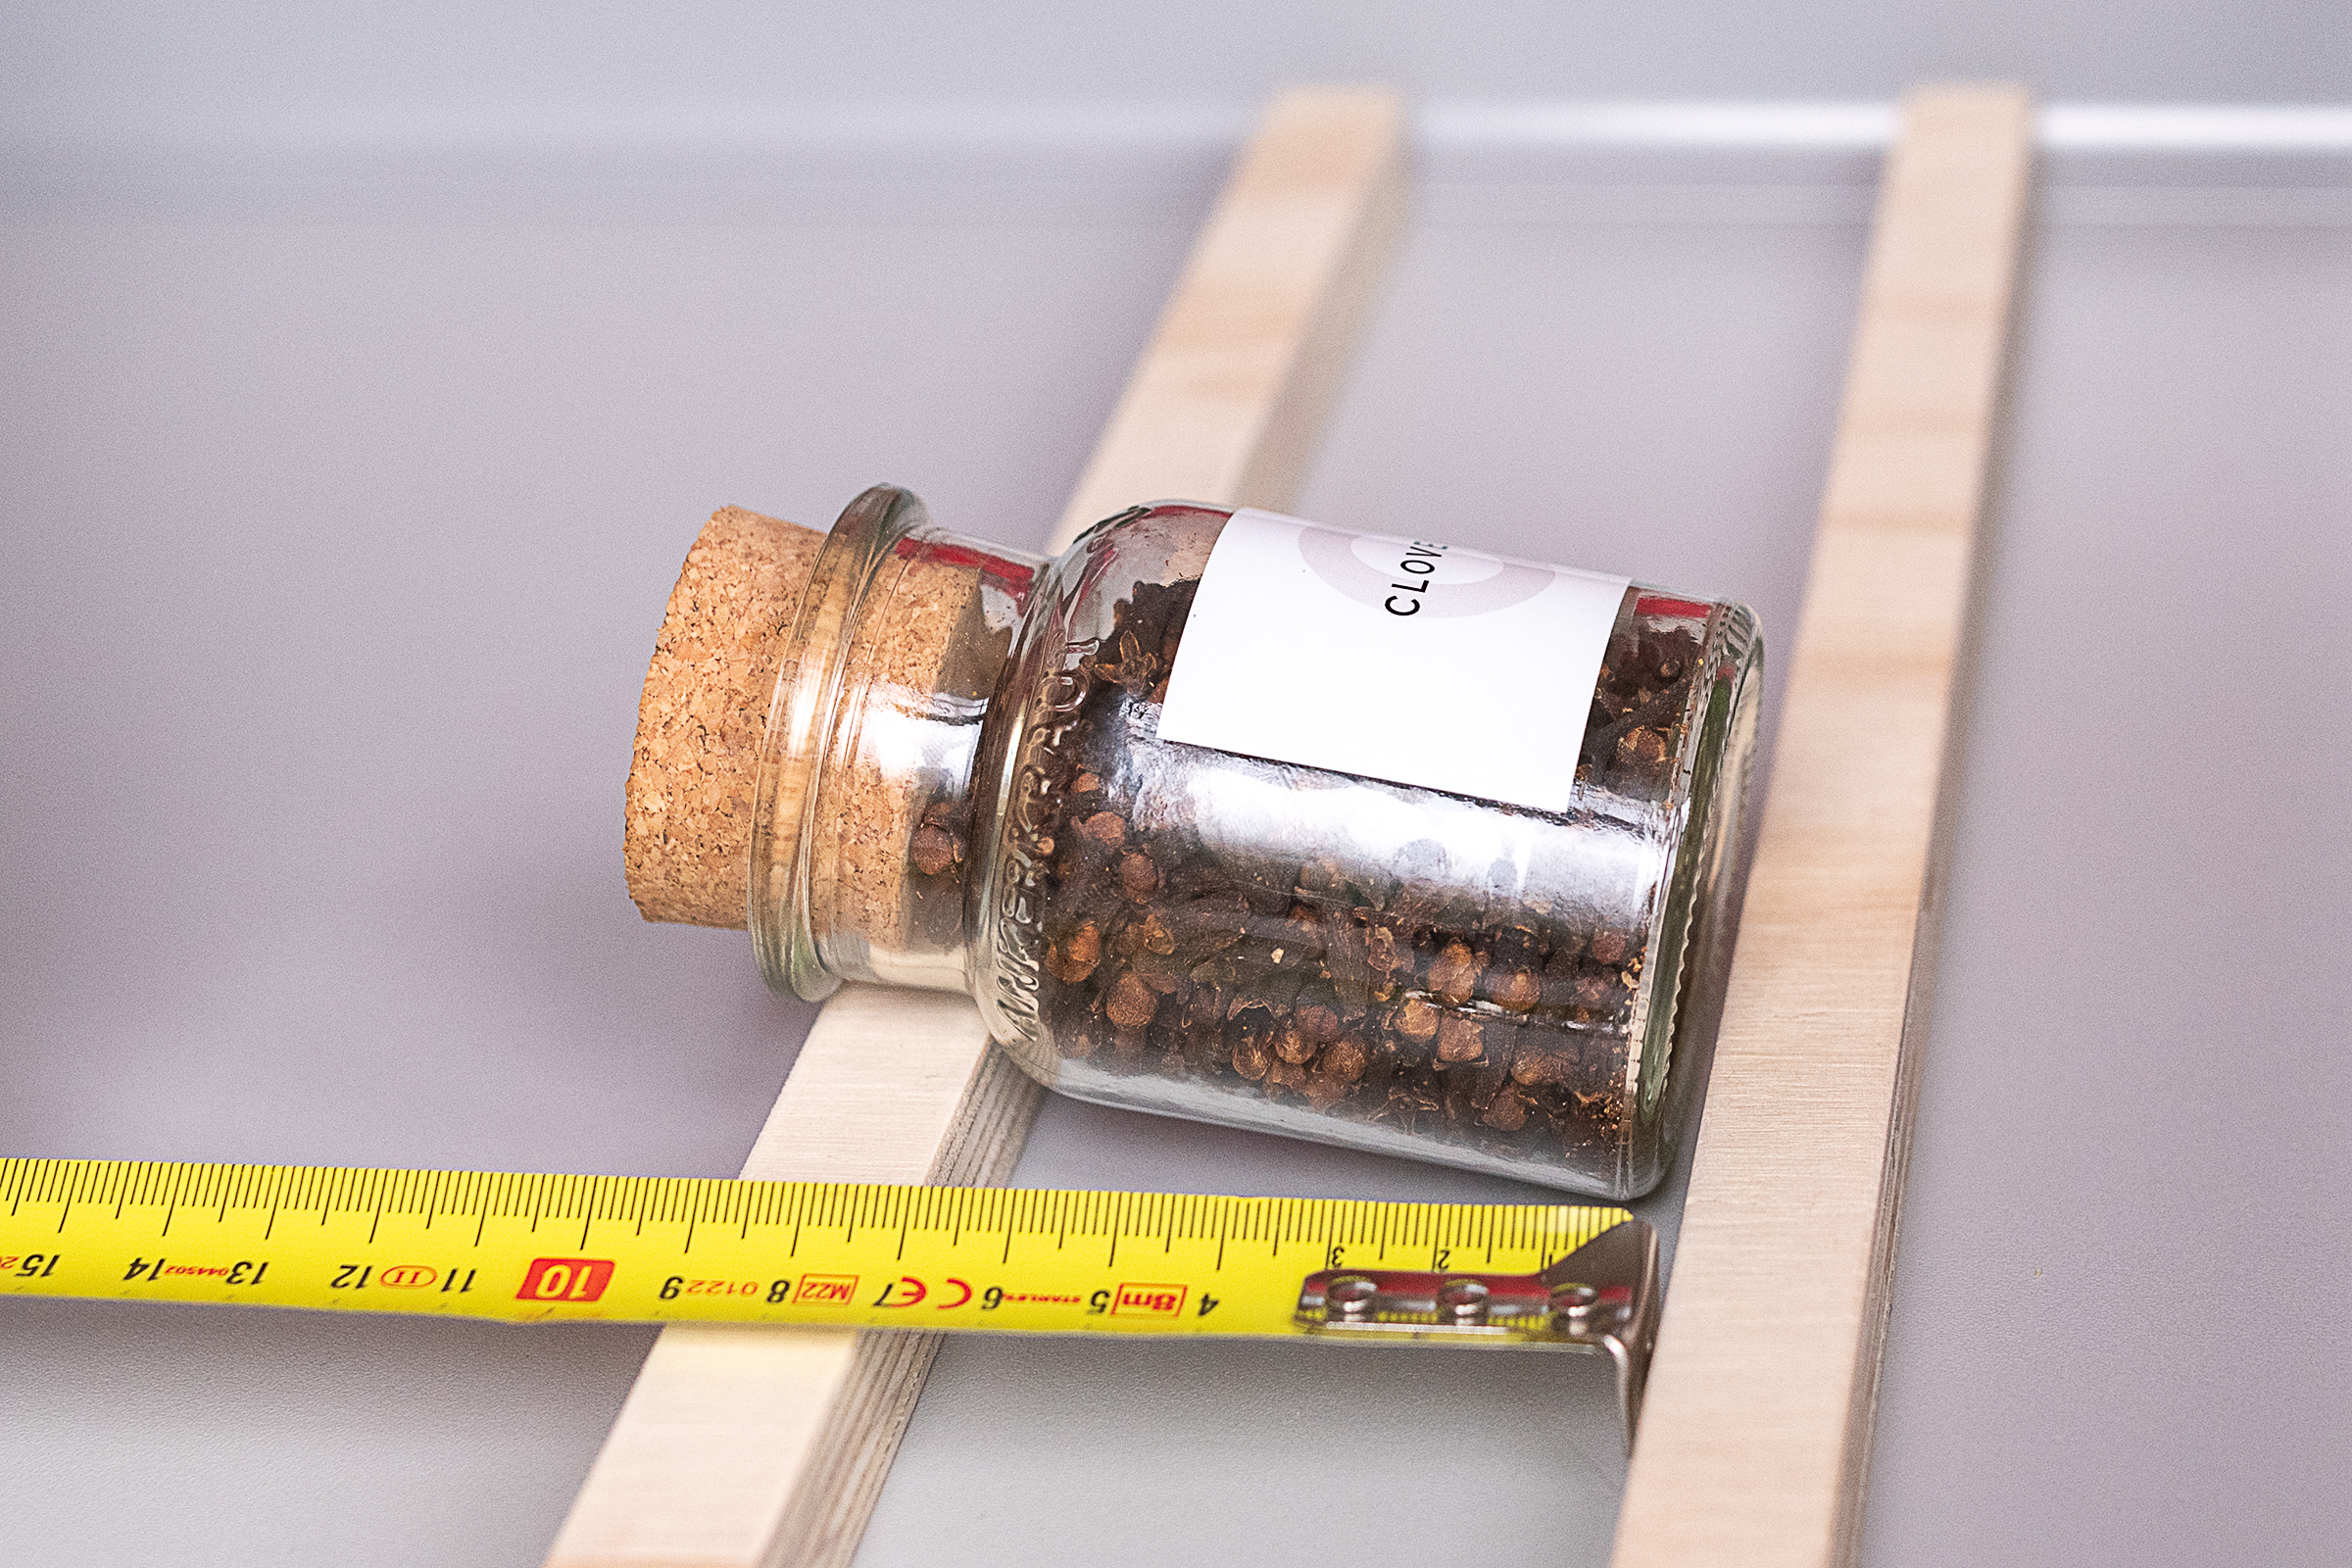 measuring distancce between spice drawer organiser